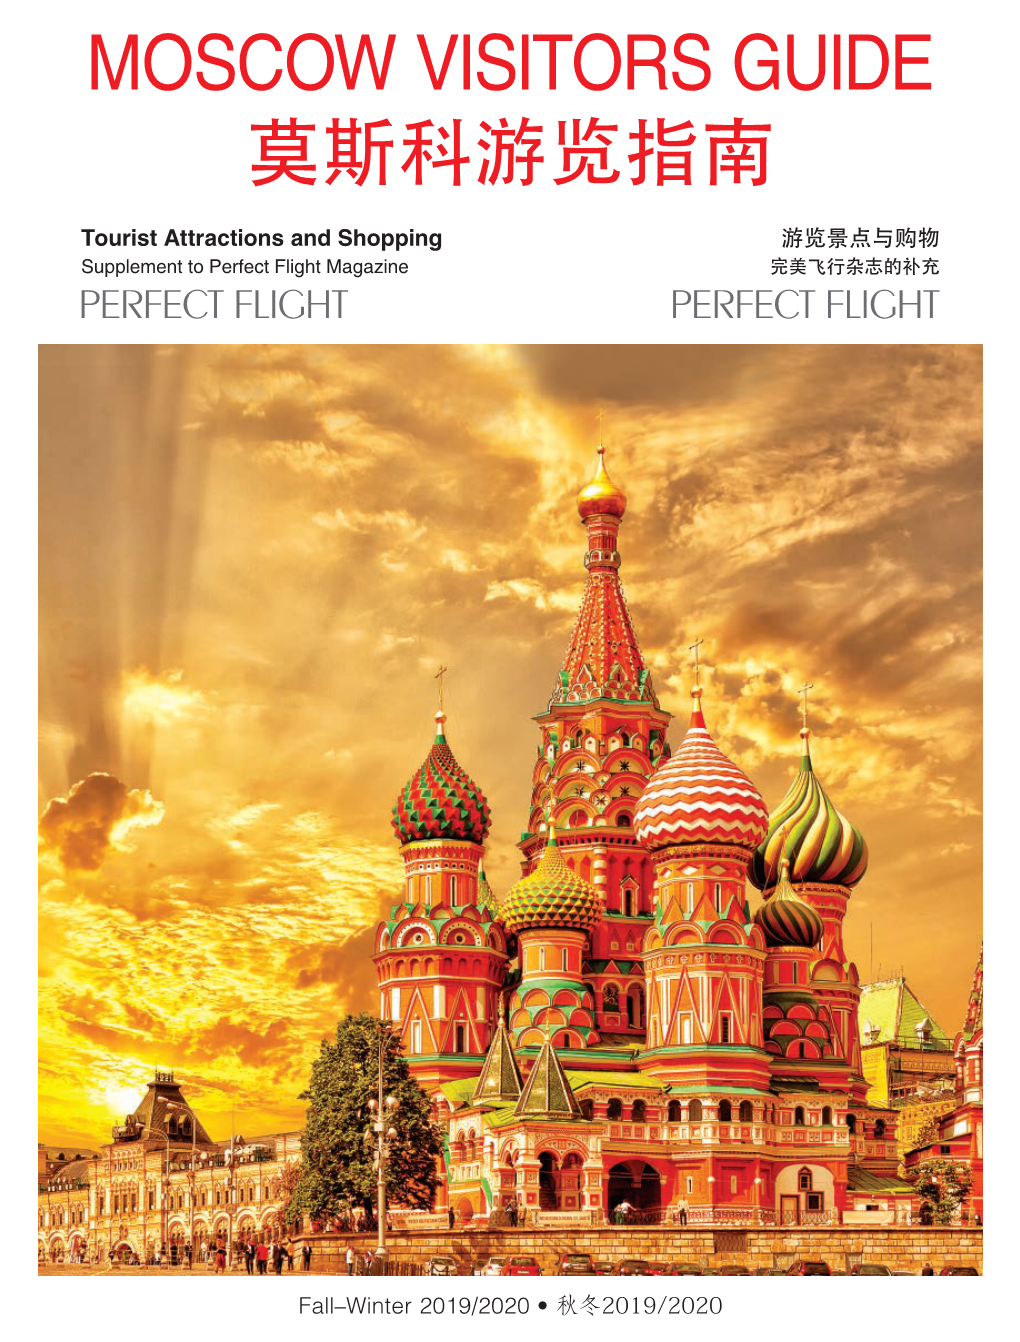 Moscow Visitors Guide 莫斯科游览指南